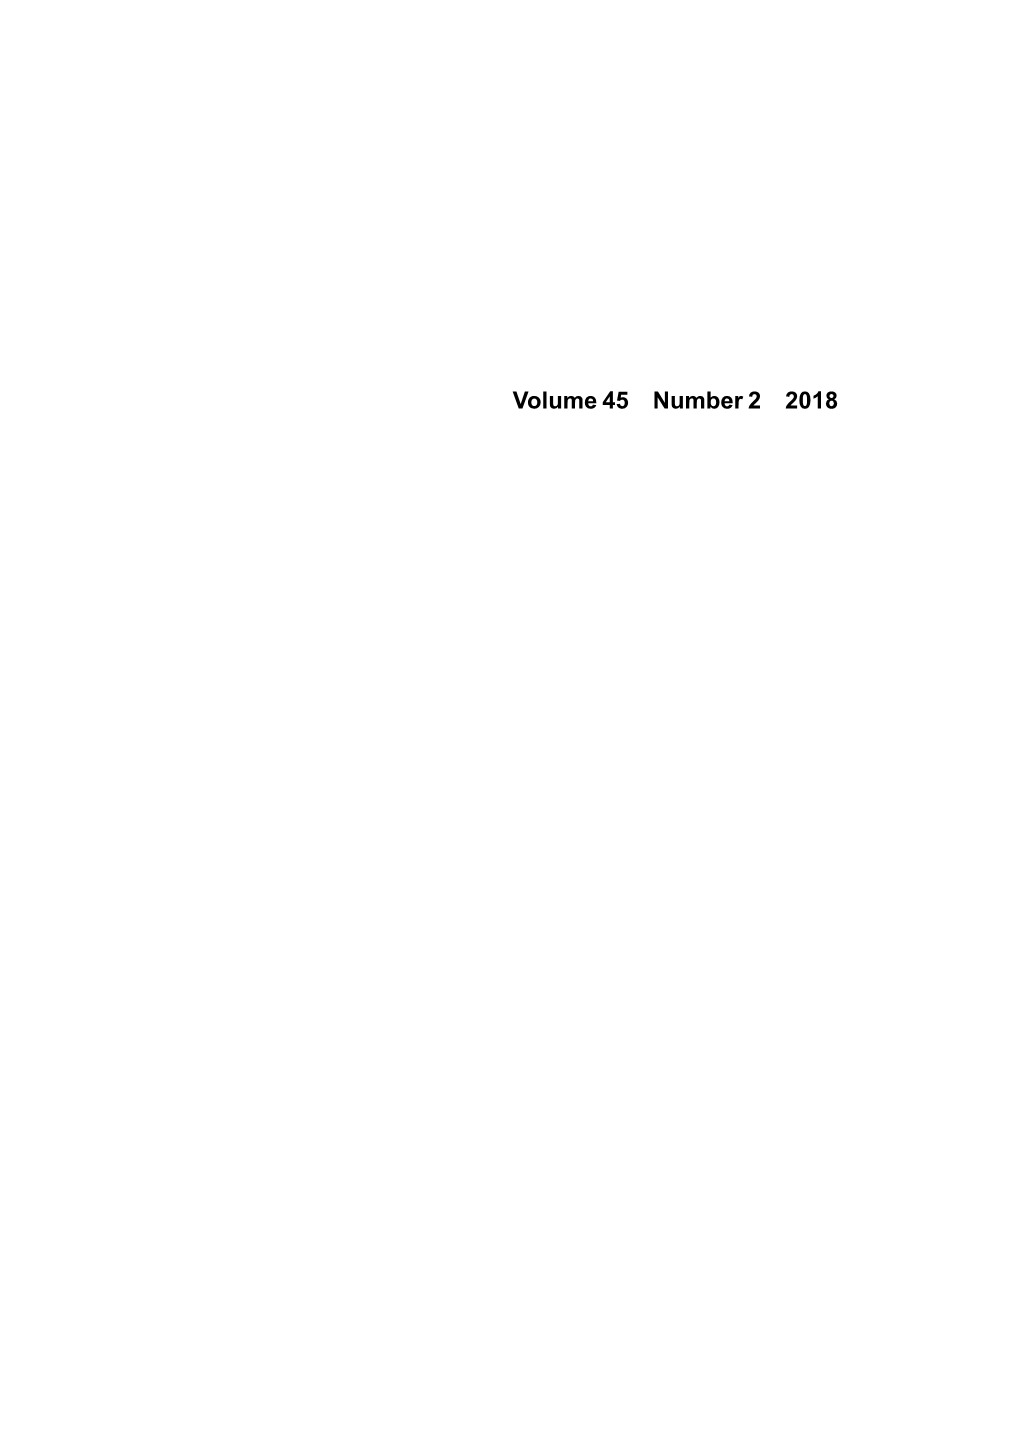 Volume 45 Number 2 2018 the Australian Mathematical Society Gazette